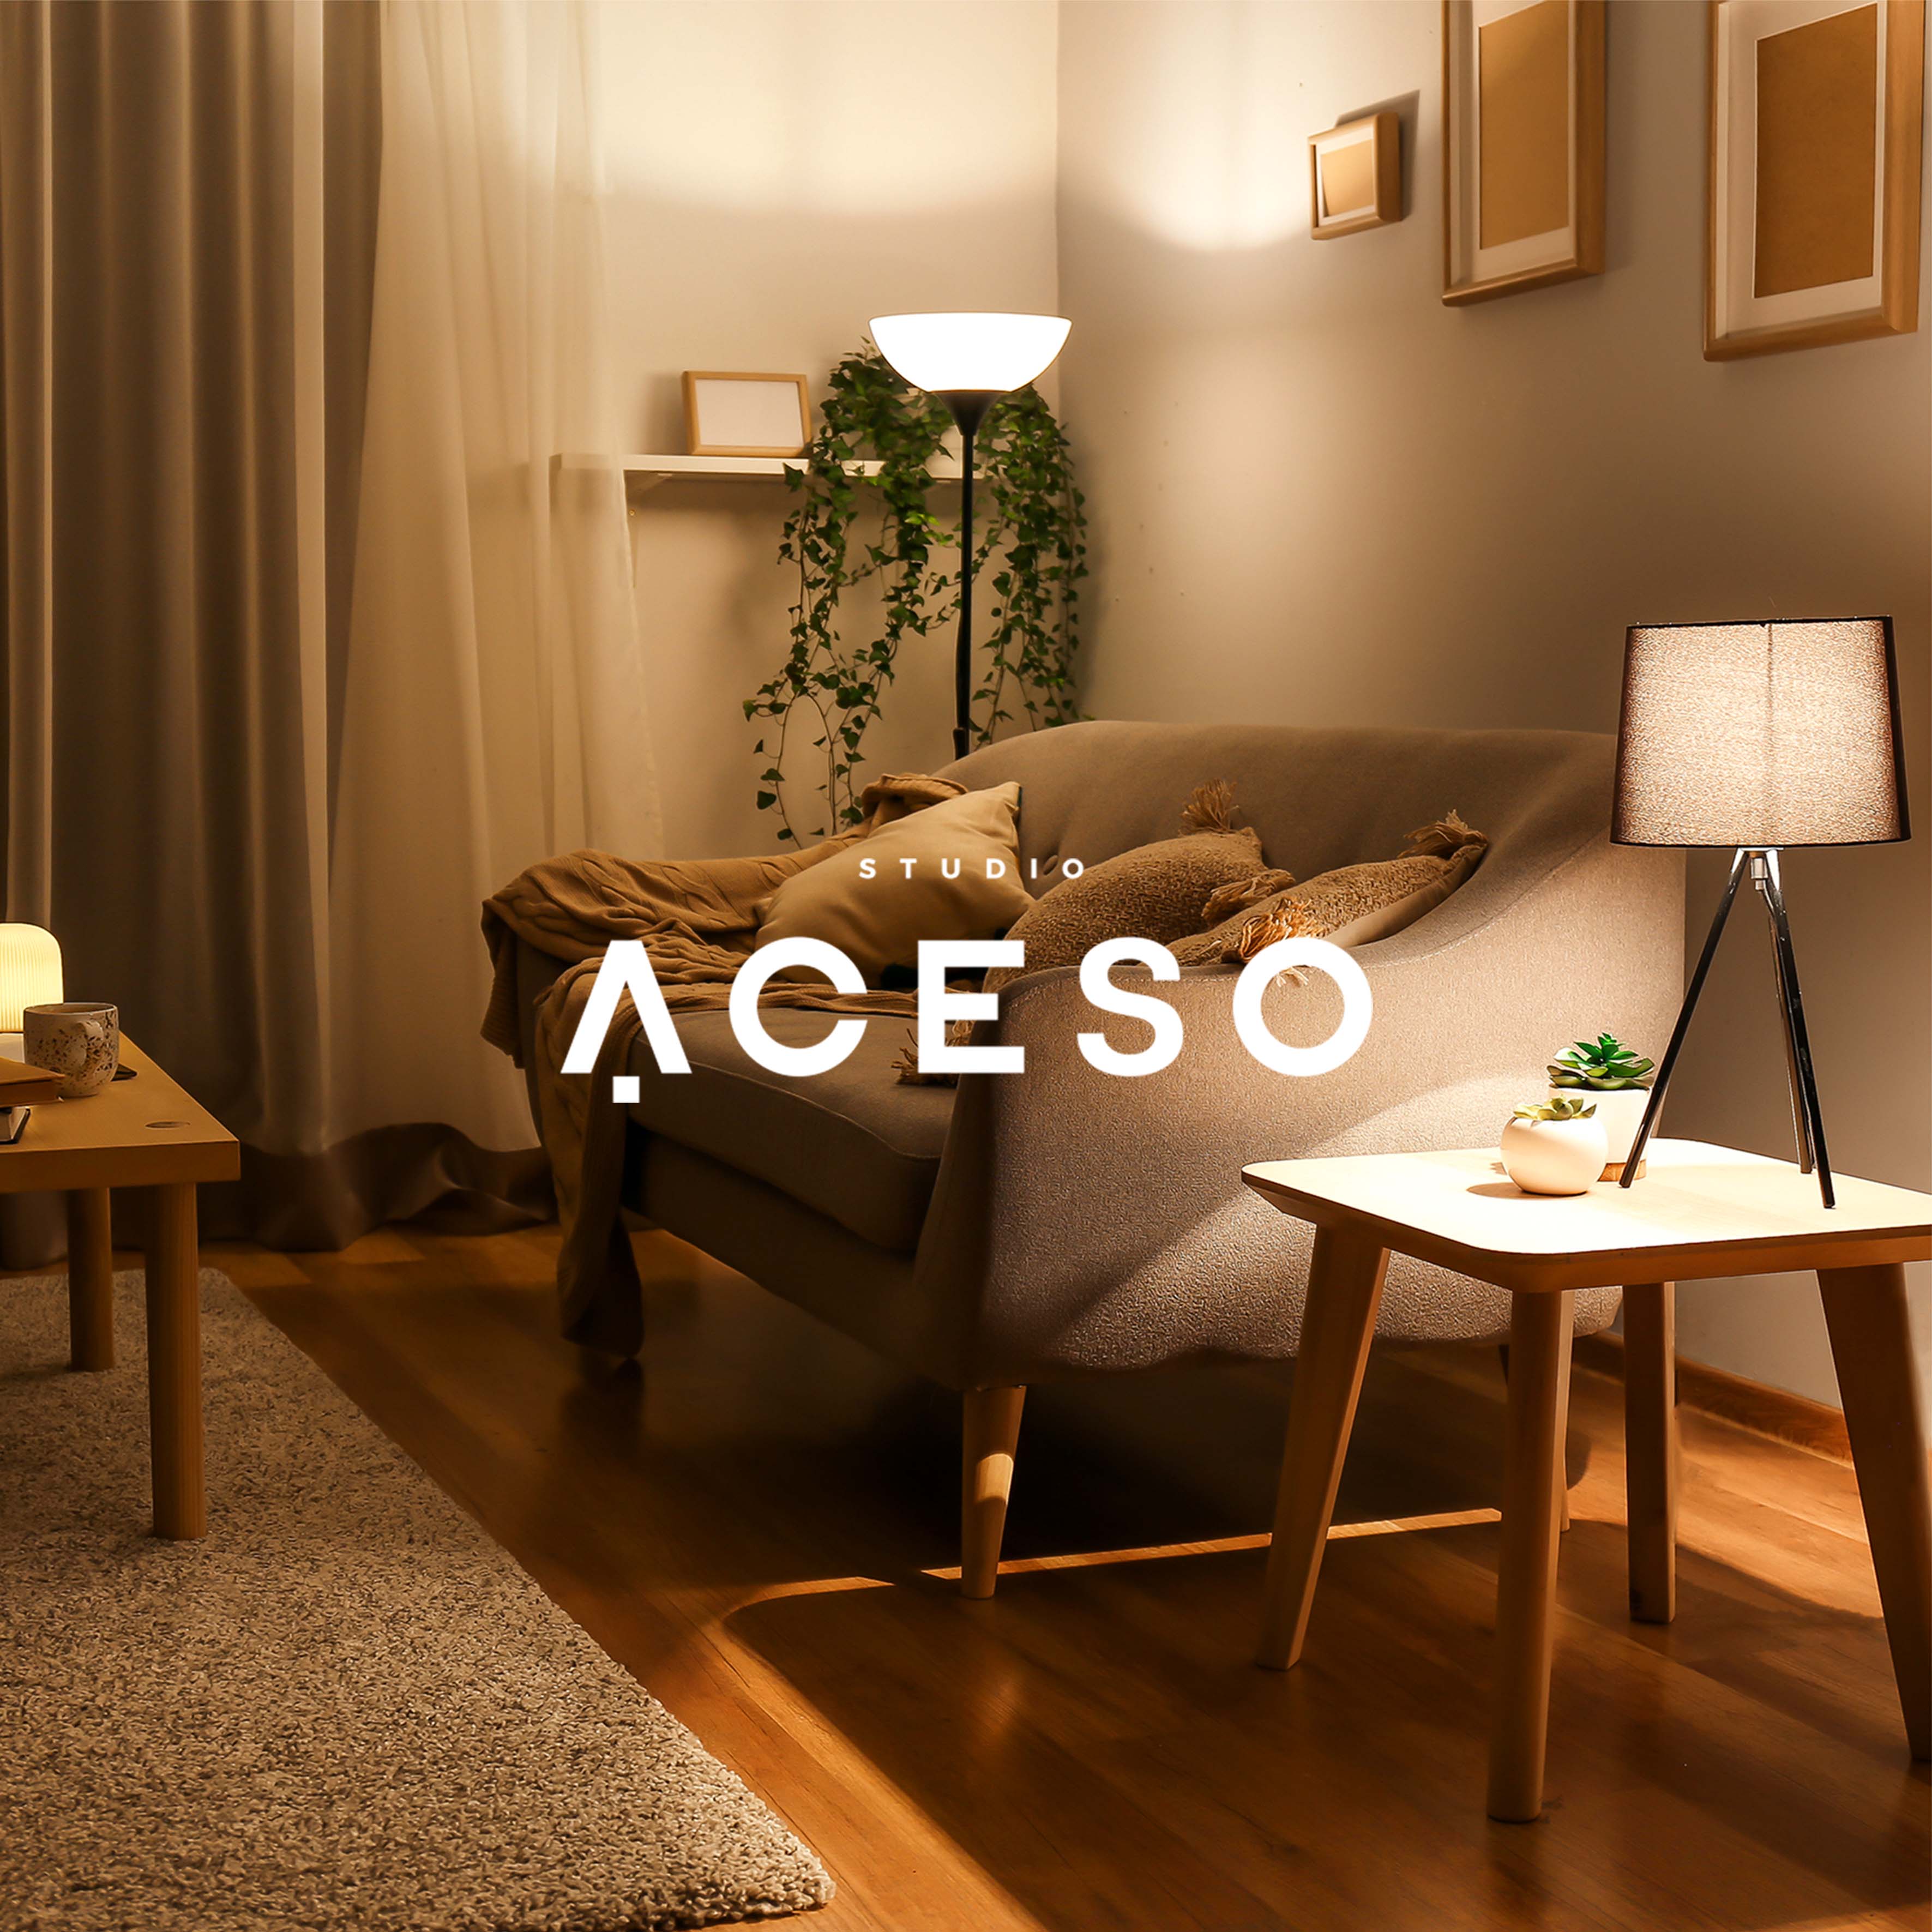 Studio Aceso Brand Design by Ale Brands